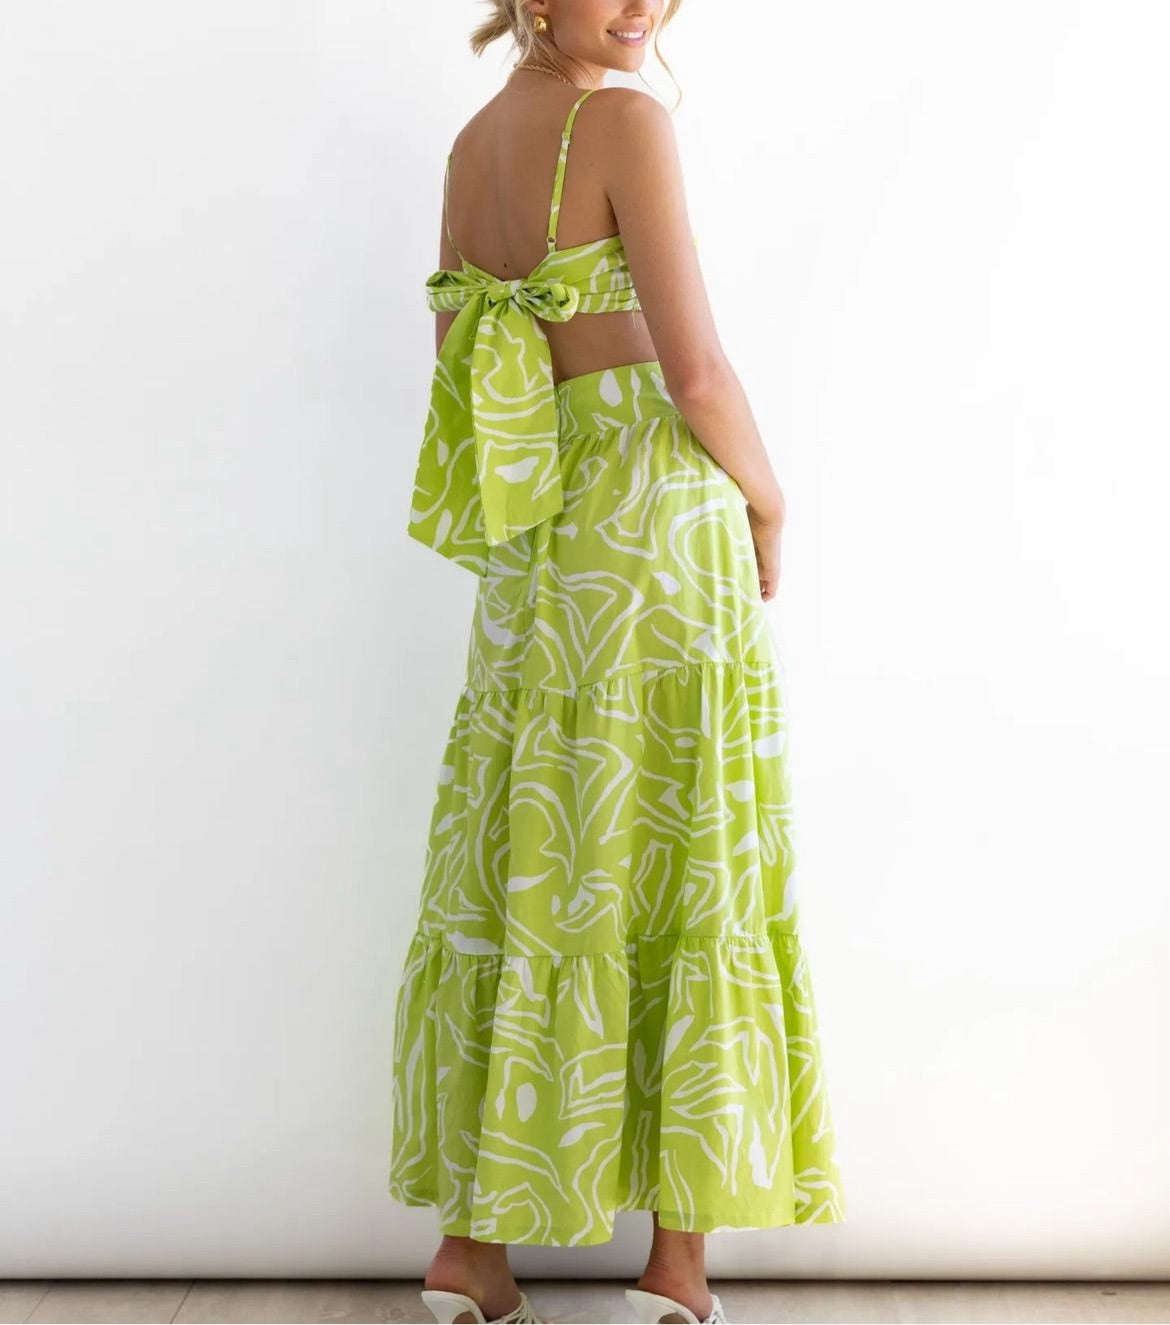 Sweetpot Lime Dress